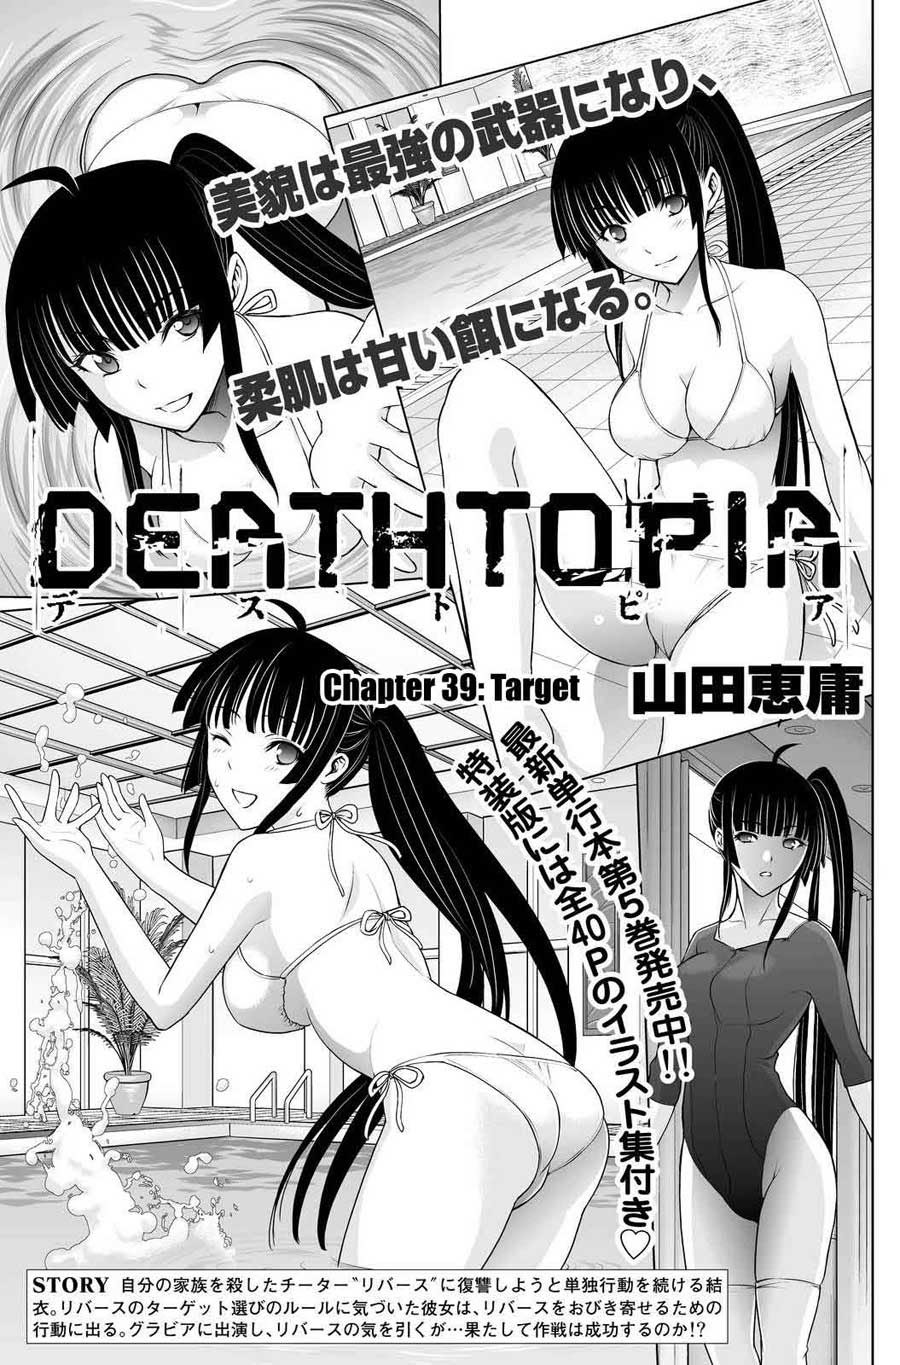 Deathtopia Chapter 39